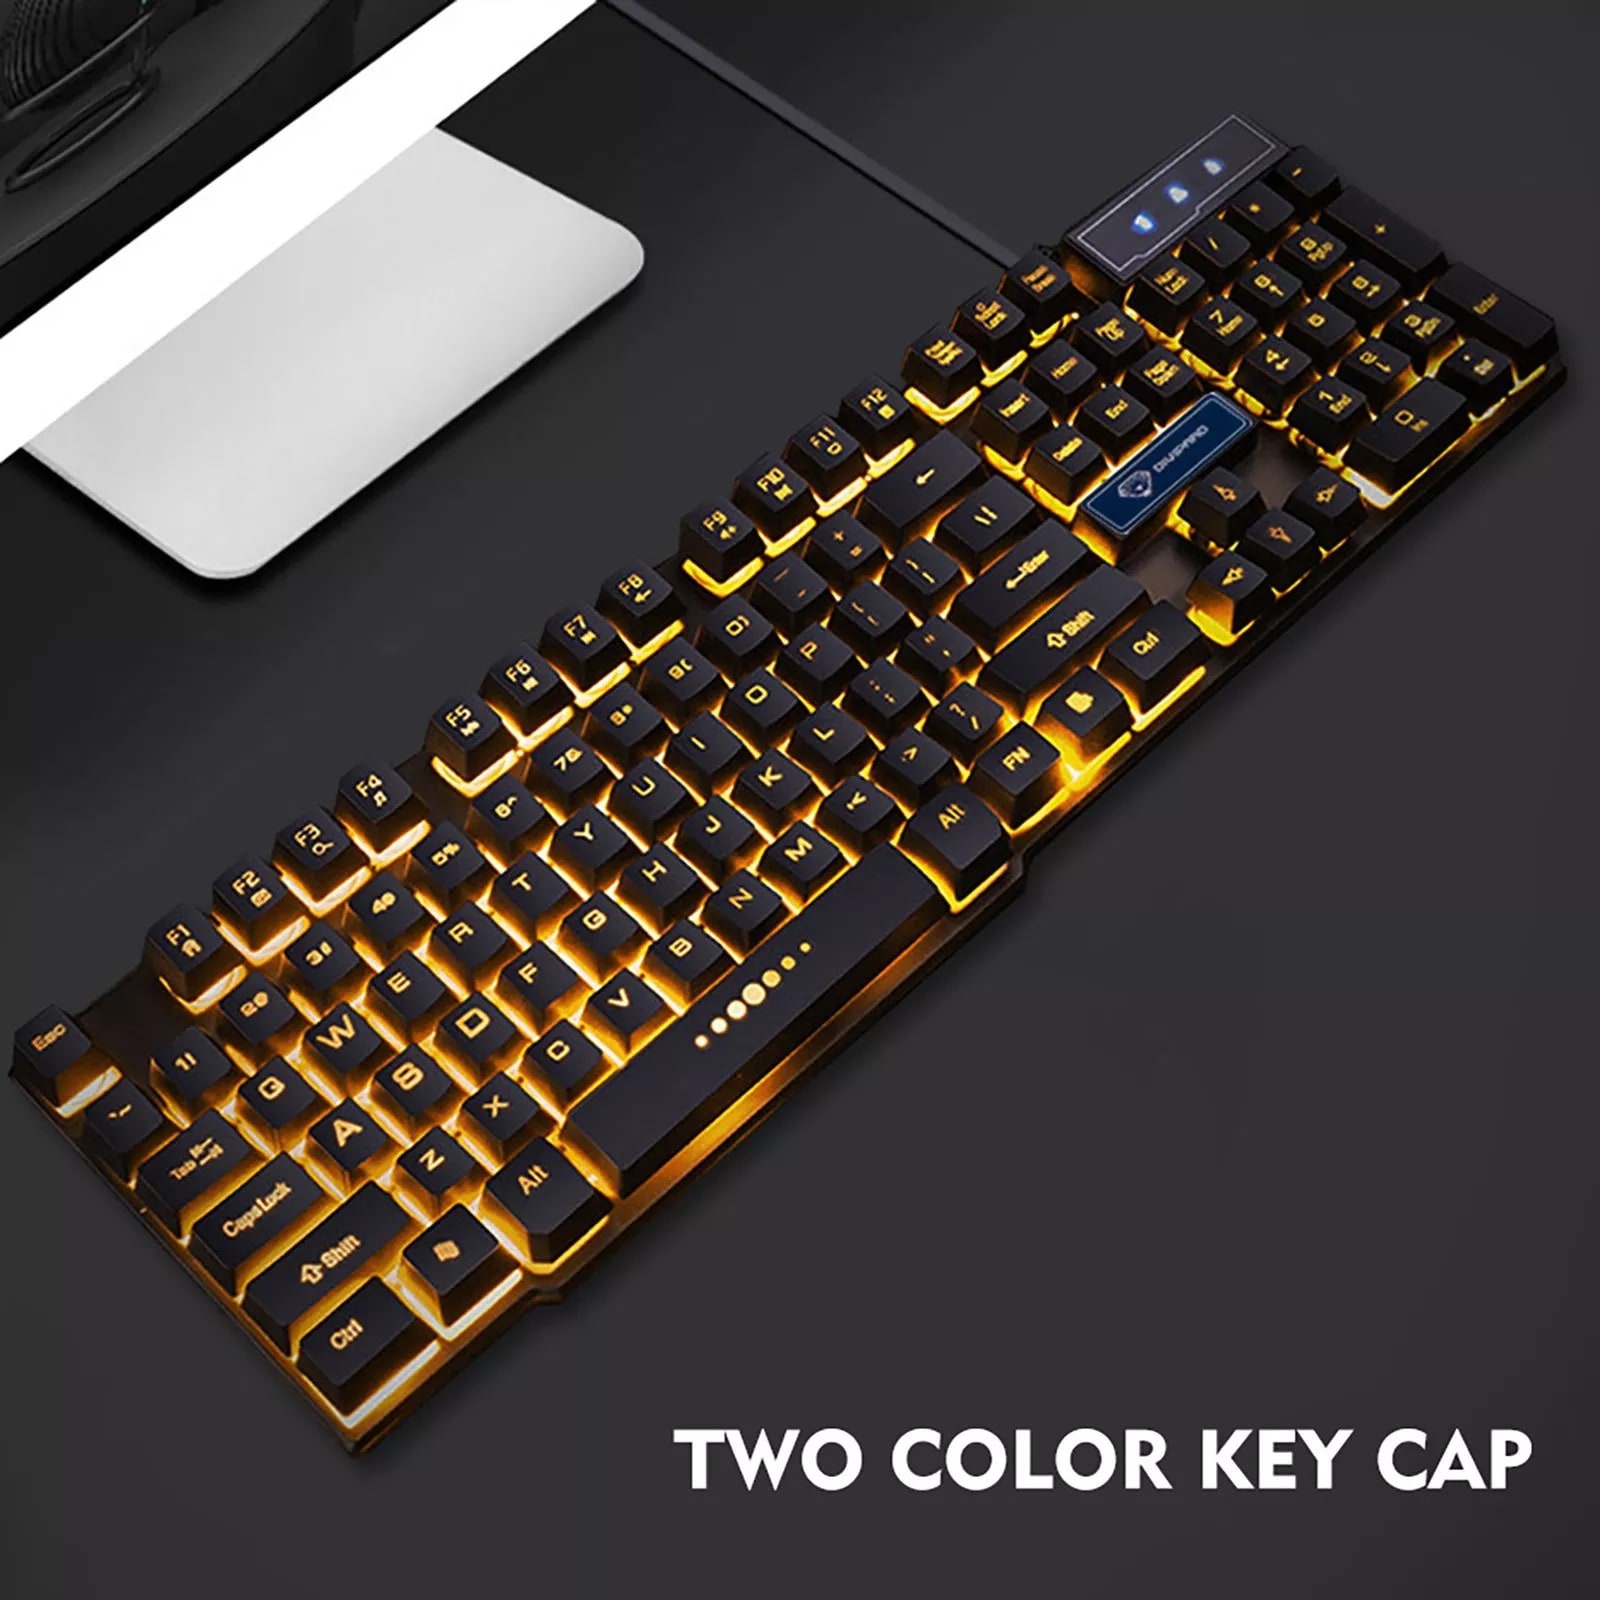 Wired USB Gaming Keyboard Floating Cap Waterproof Rainbow White - 2